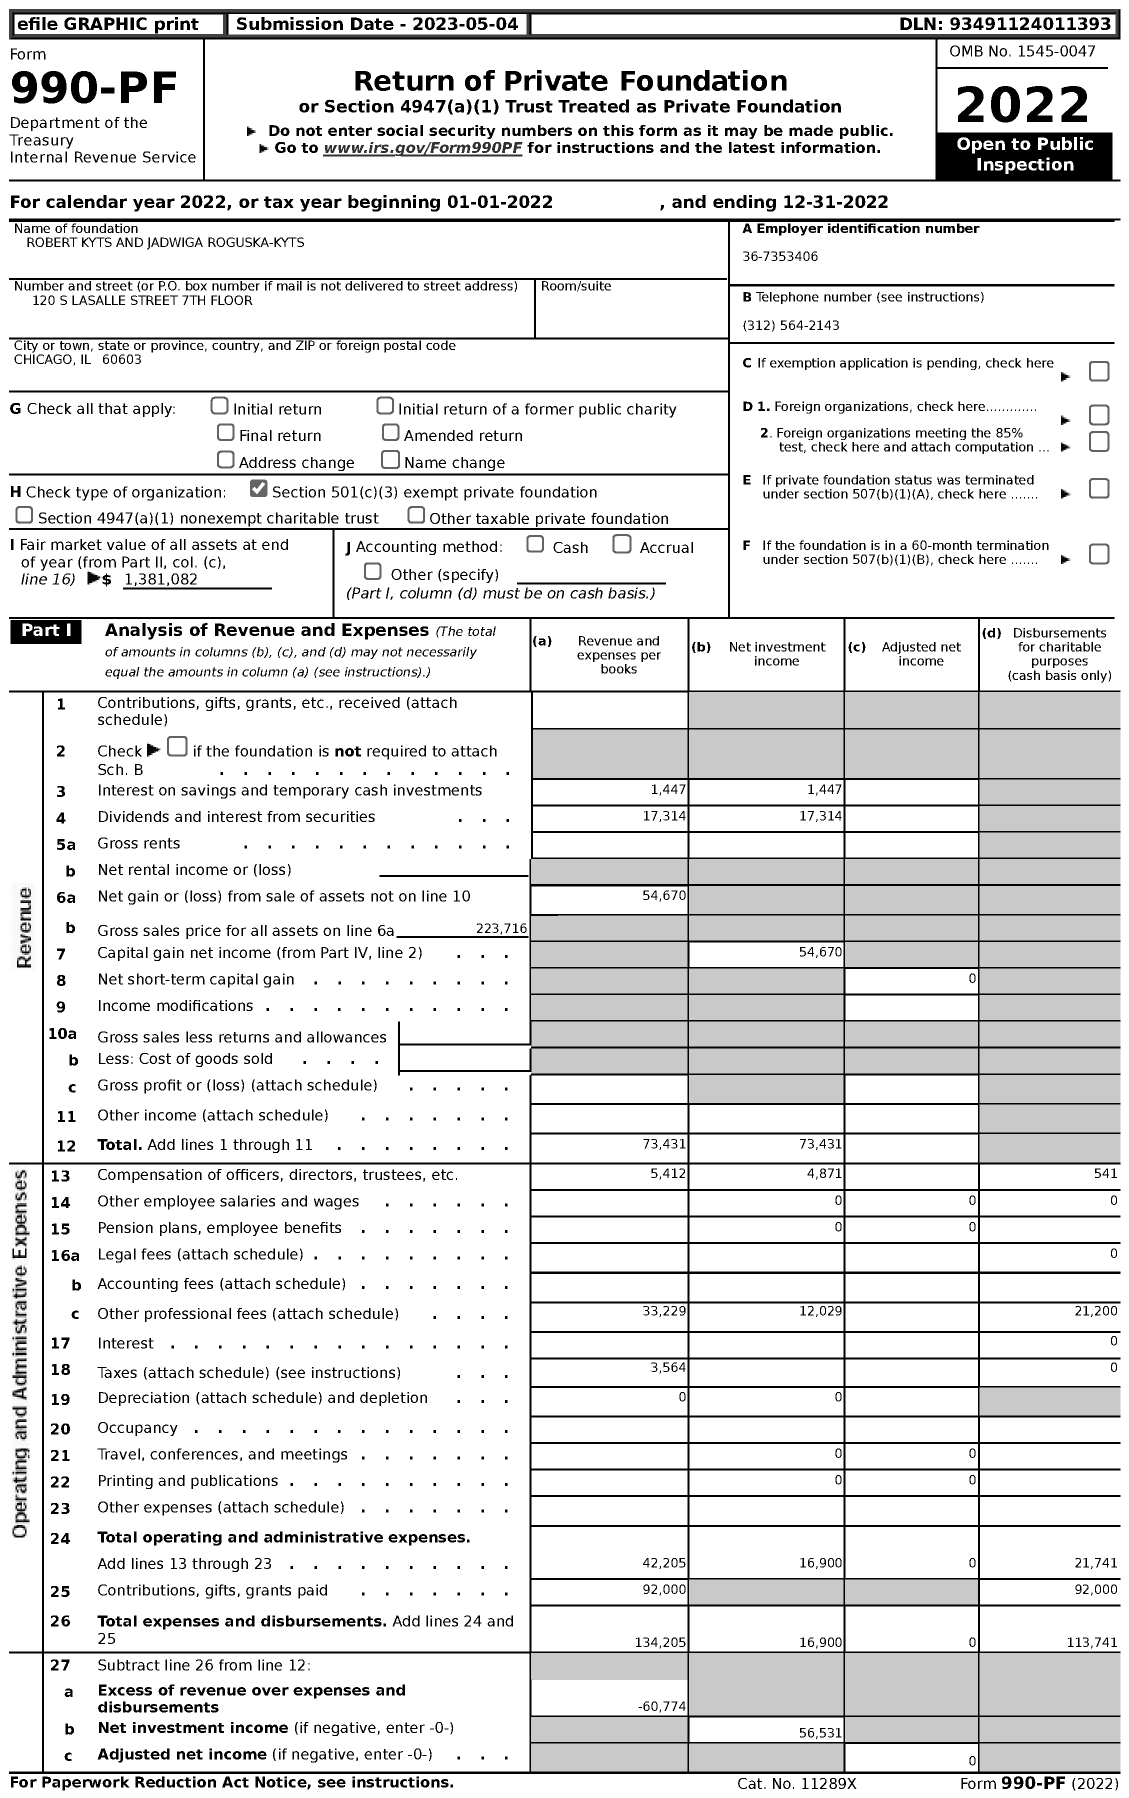 Image of first page of 2022 Form 990PF for Robert Kyts and Jadwiga Roguska-Kyts